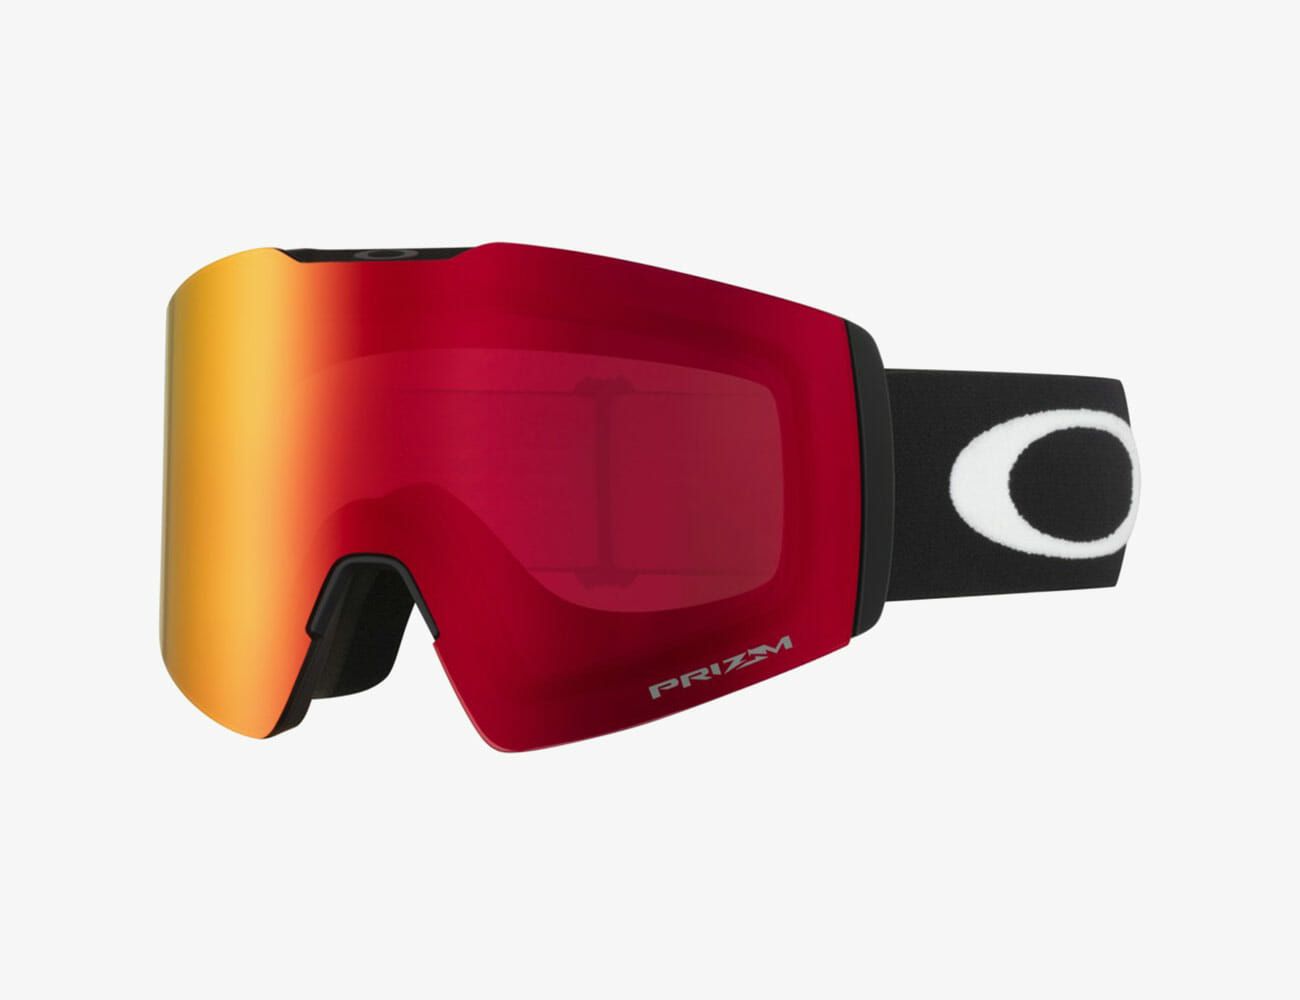 oakley photochromic ski goggles